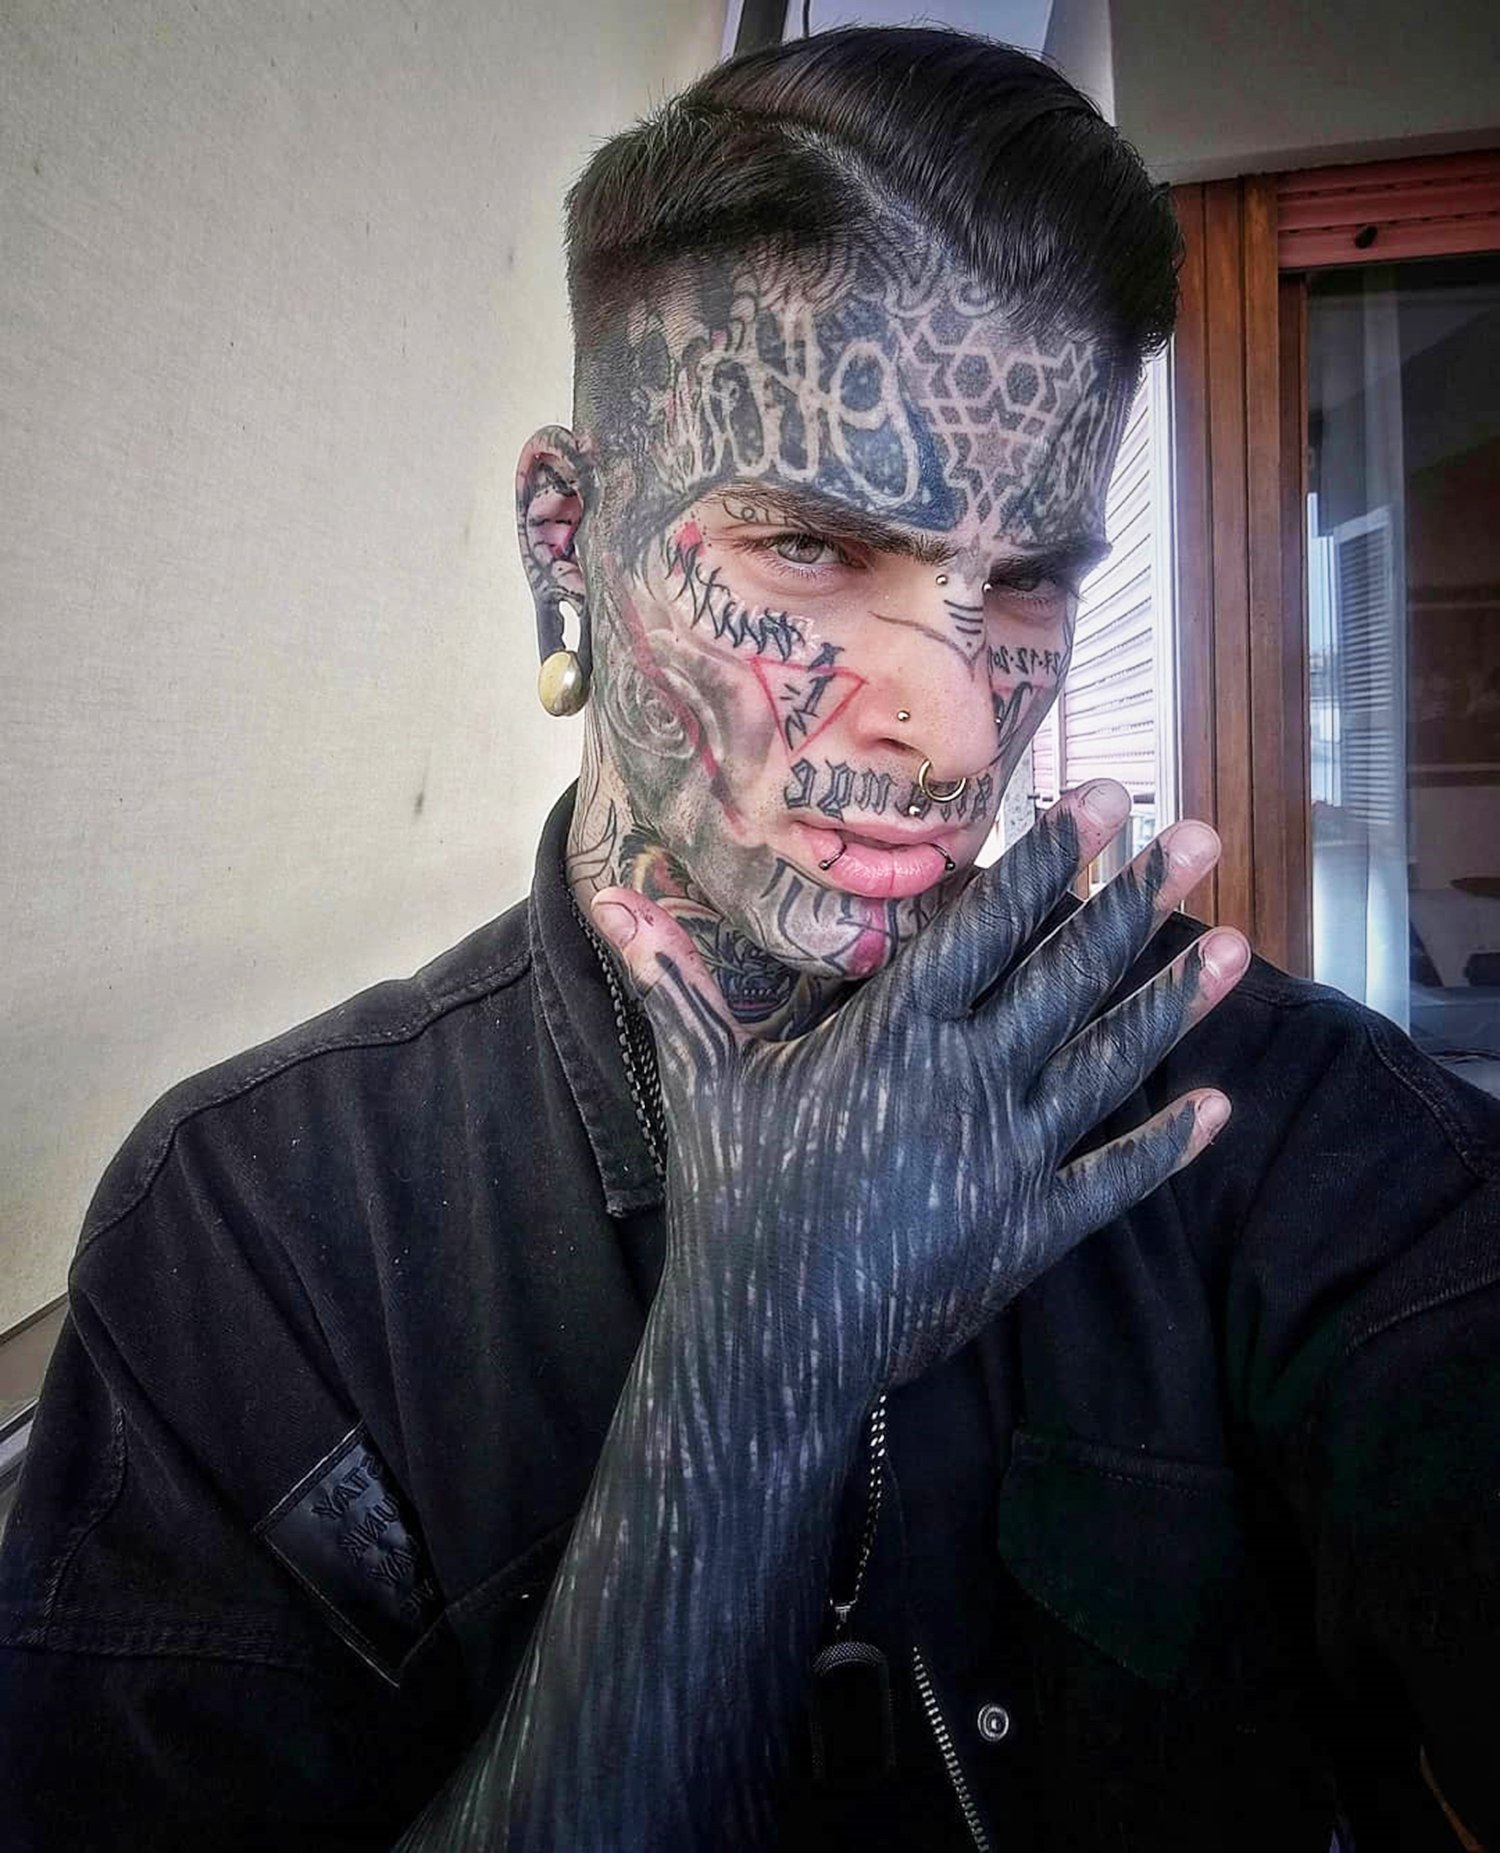 loscoboy milan model, heavily tattooed